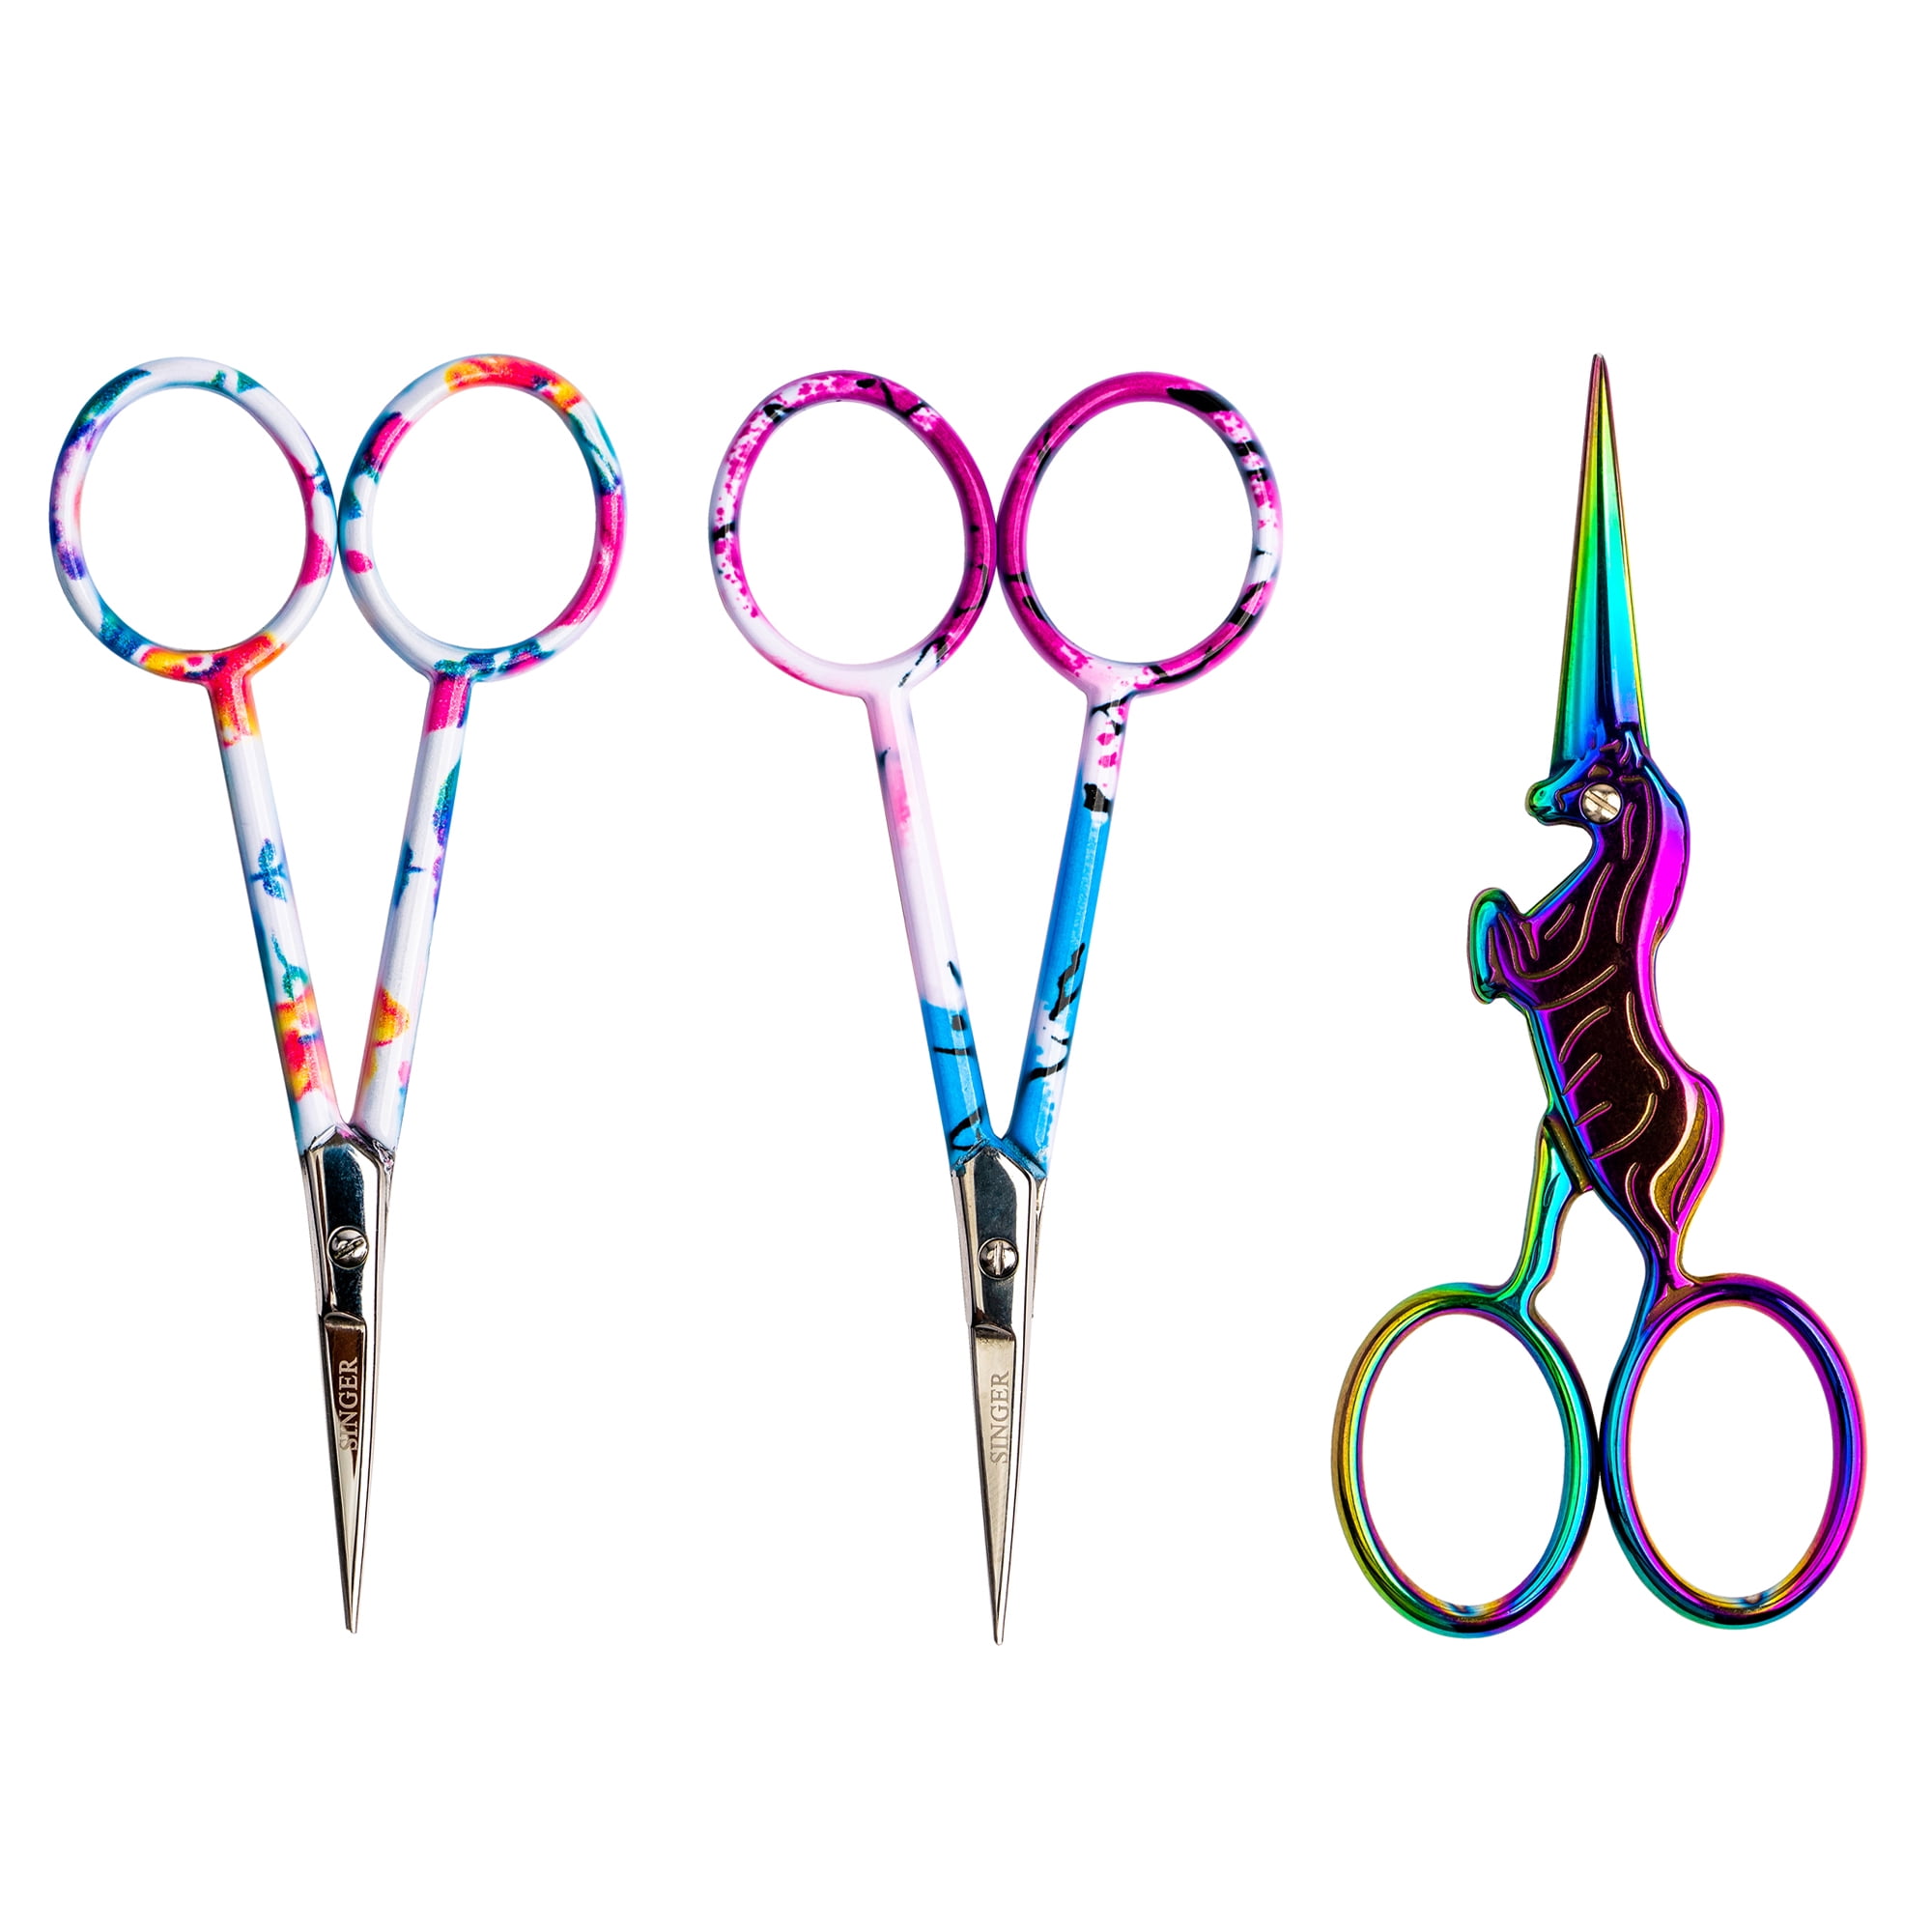 JubileeYarn Embroidery Scissors - 4 1/2 Fine Cut Sharp Point Titanium  Scissors w/ Sheath - Small Craft Snip Scissors - Gold - 1 Pair 